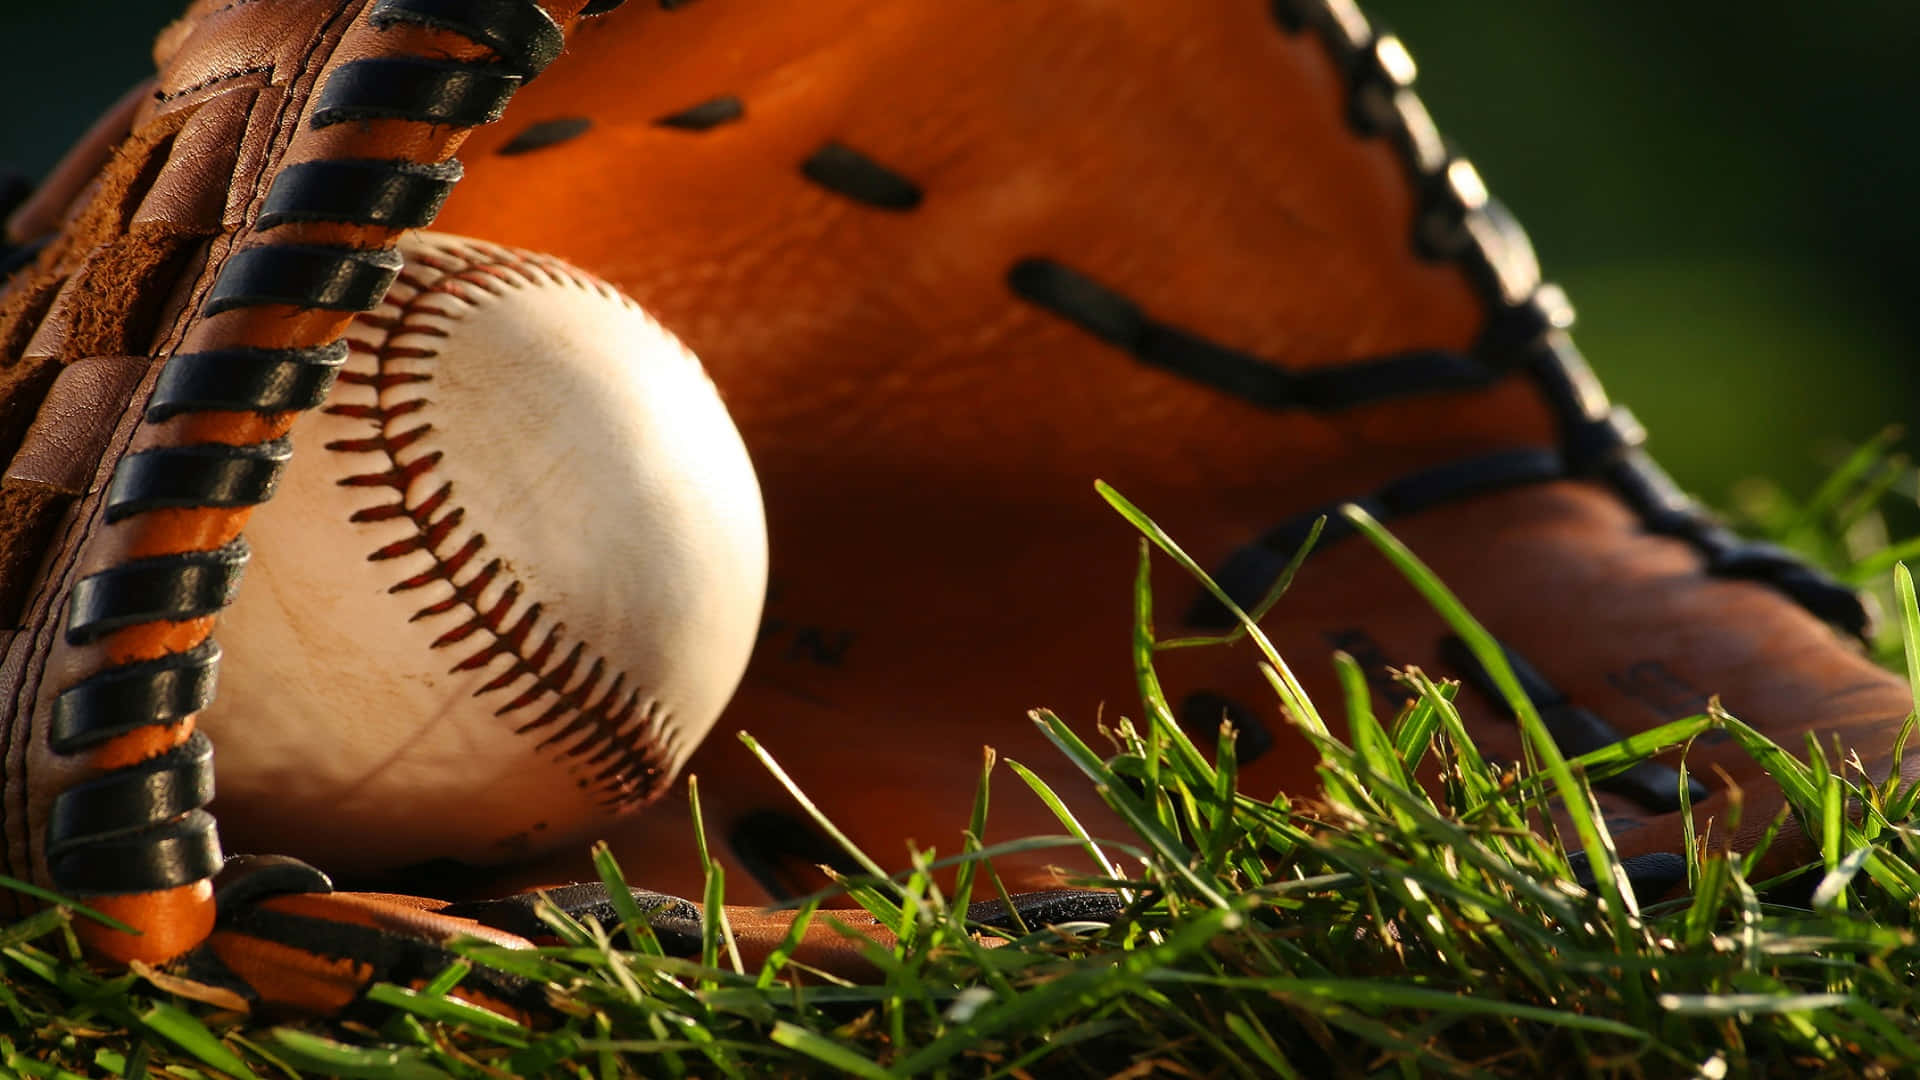 A close-up of a baseball glove on a grass field with a baseball nestled inside Wallpaper